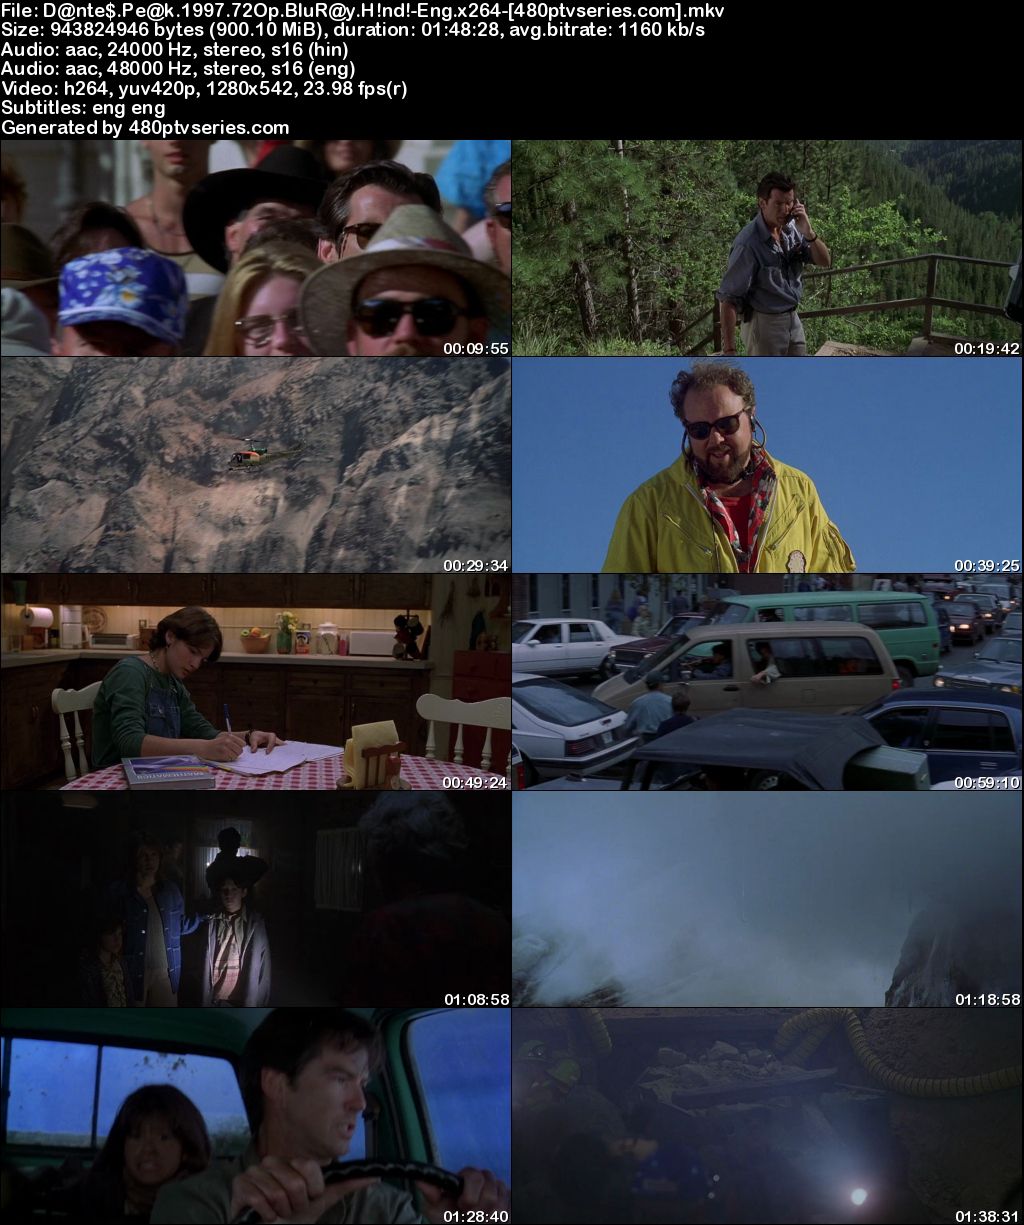 Watch Online Free Dante’s Peak (1997) Full Hindi Dual Audio Movie Download 480p 720p BluRay